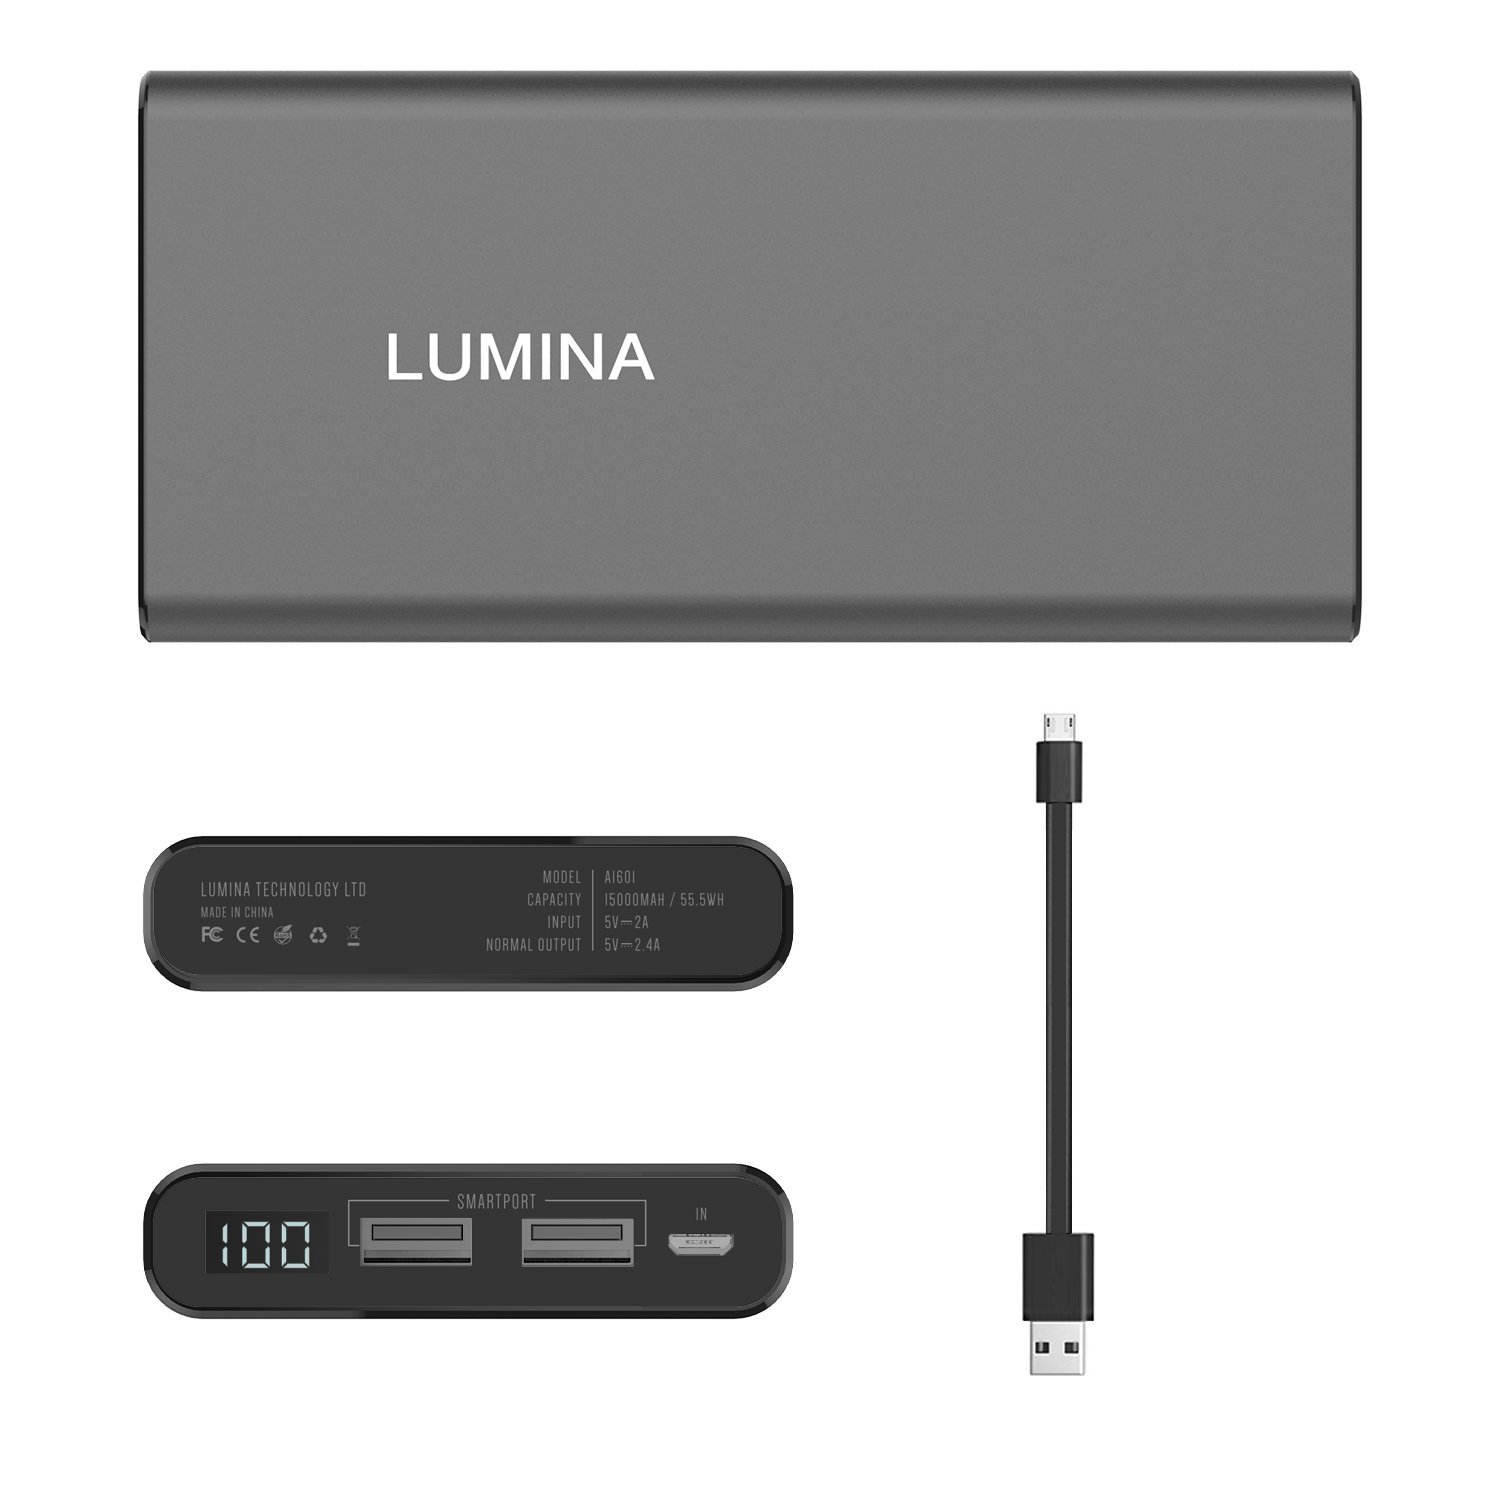 Lumina Ultra Compact Portable Charger – Just $27.19!